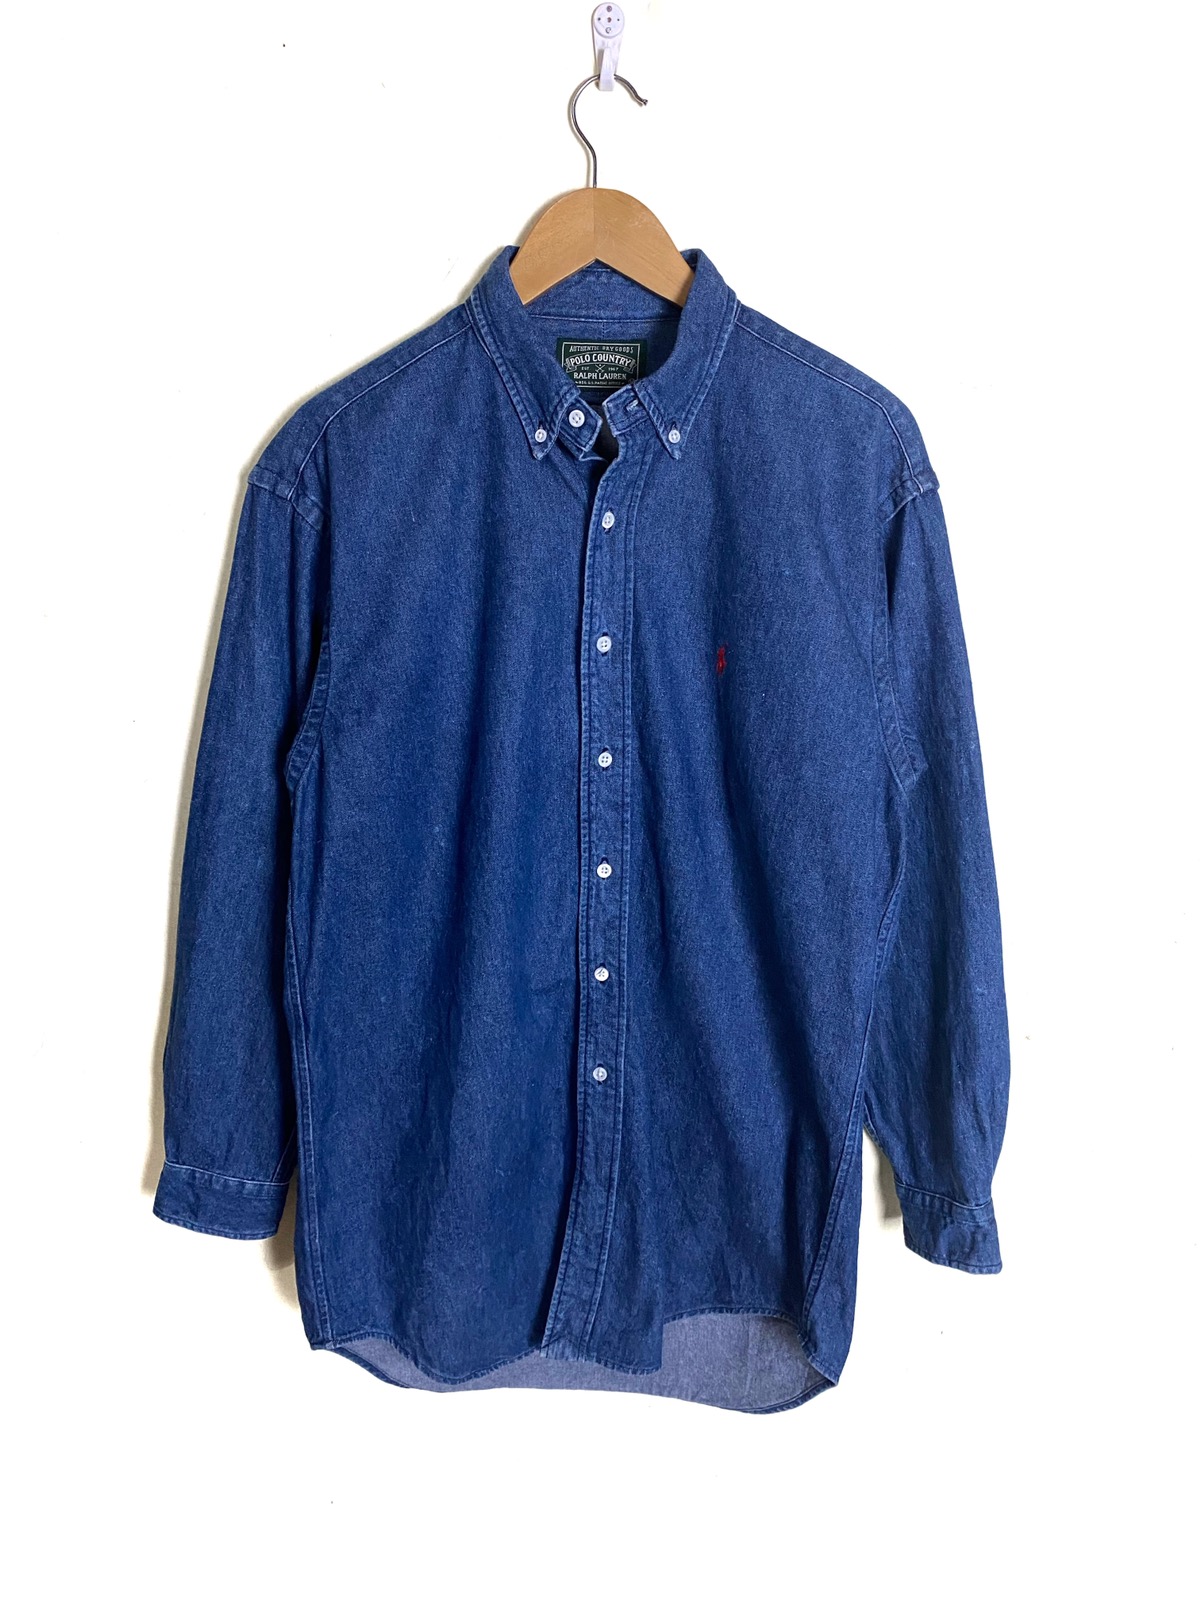 Polo Ralph Lauren - Vintage 90’s POLO Ralph Lauren Polo Country Denim Jean Shirt - 1